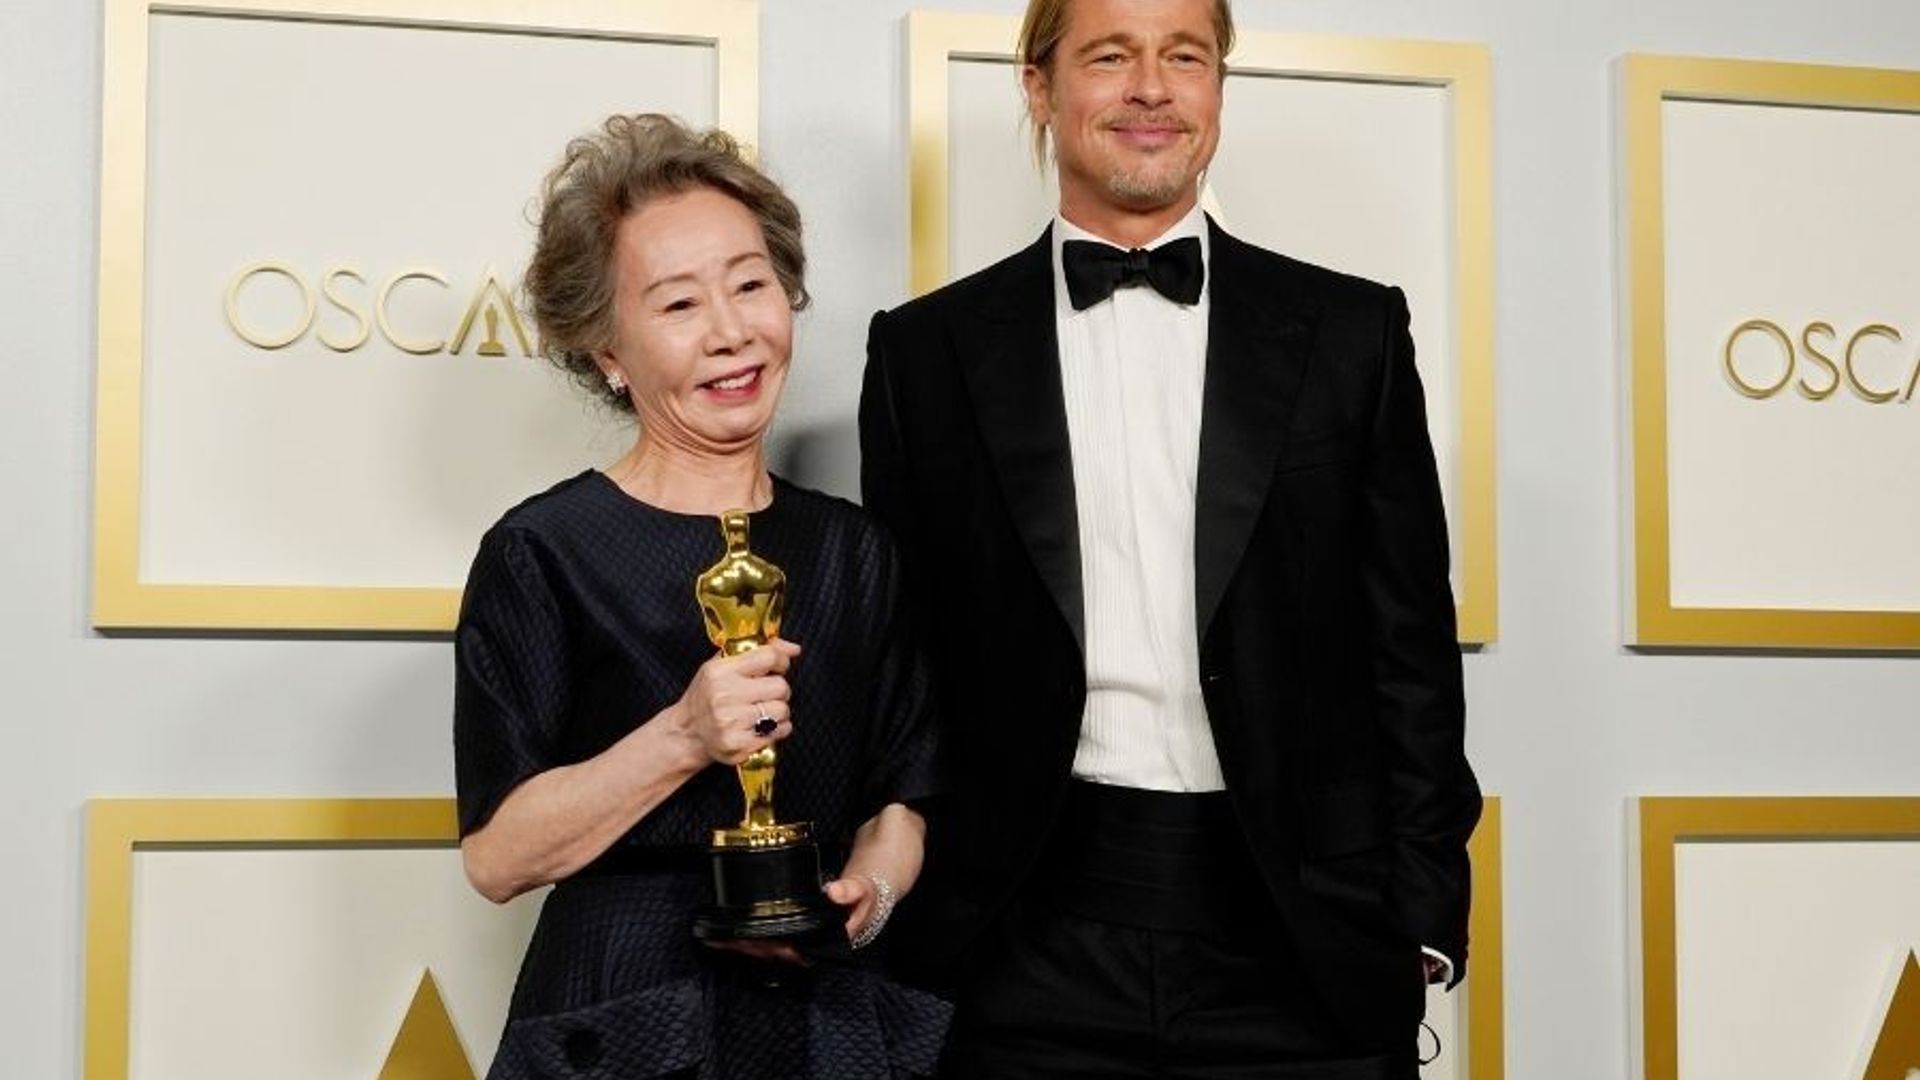 Brad Pitt had an emotional moment at the Oscars